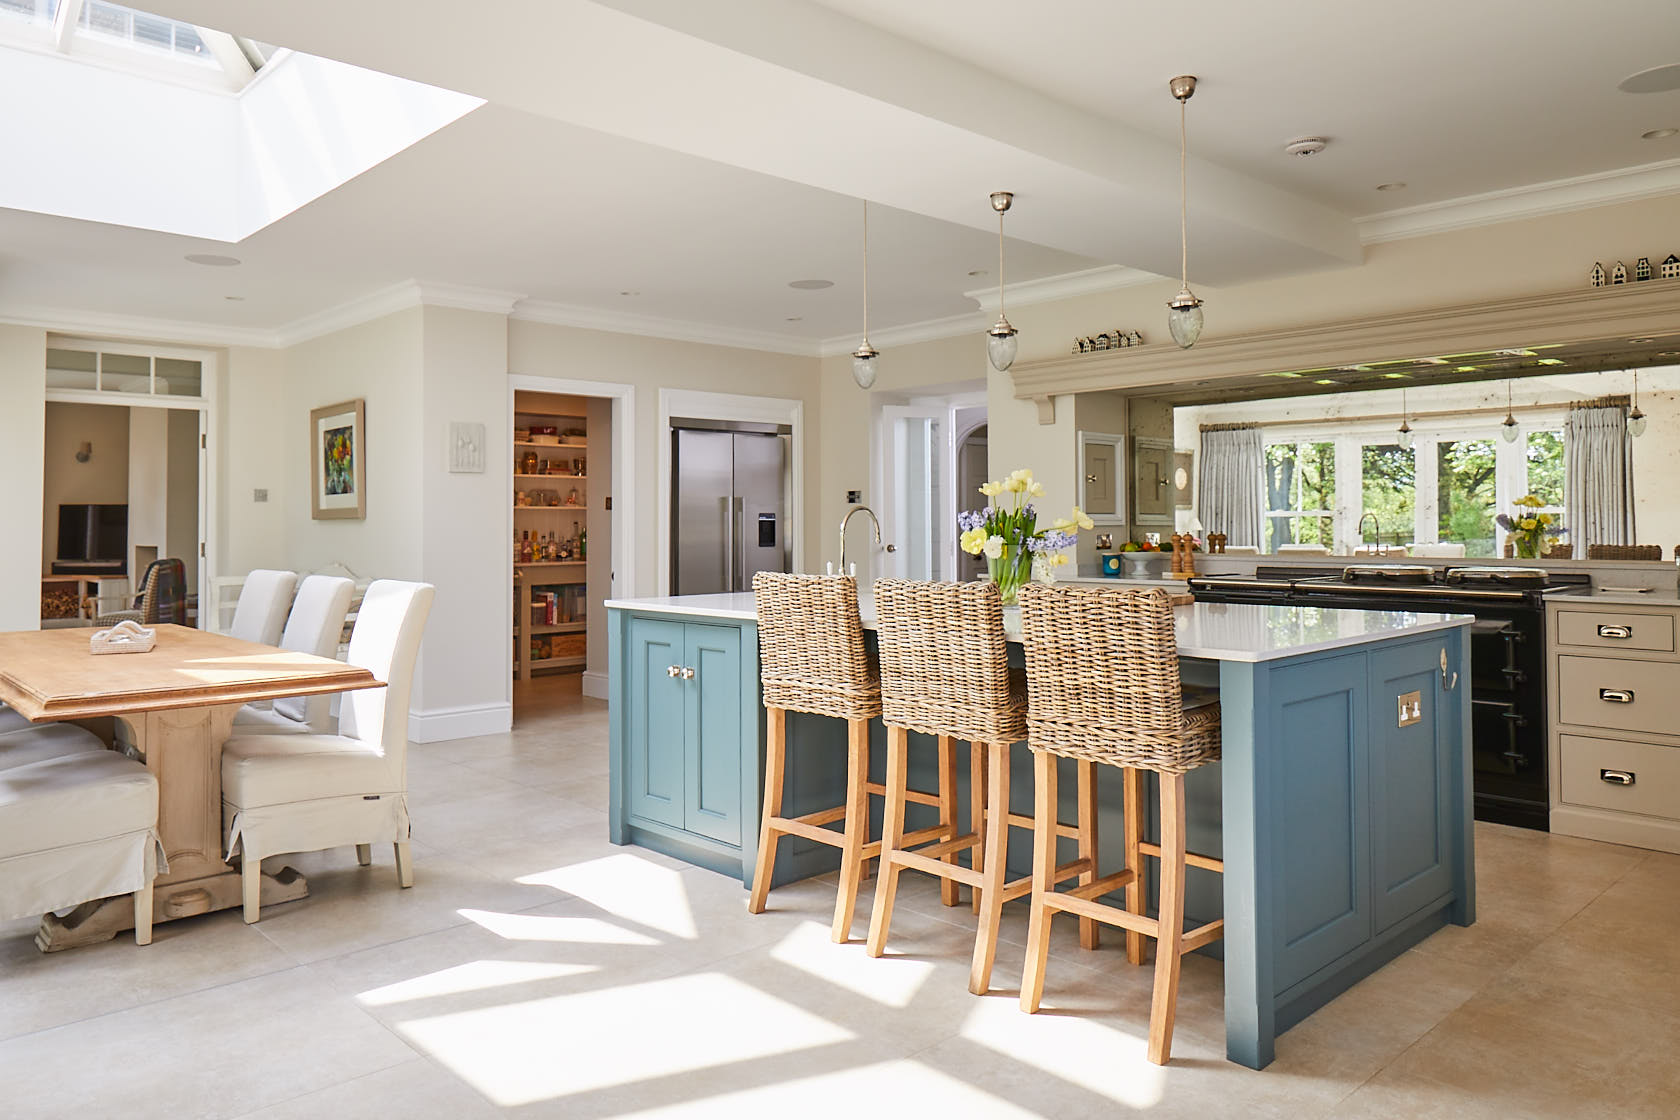 Open plan kitchen with bespoke kitchen island incorporating breakfast bar stools